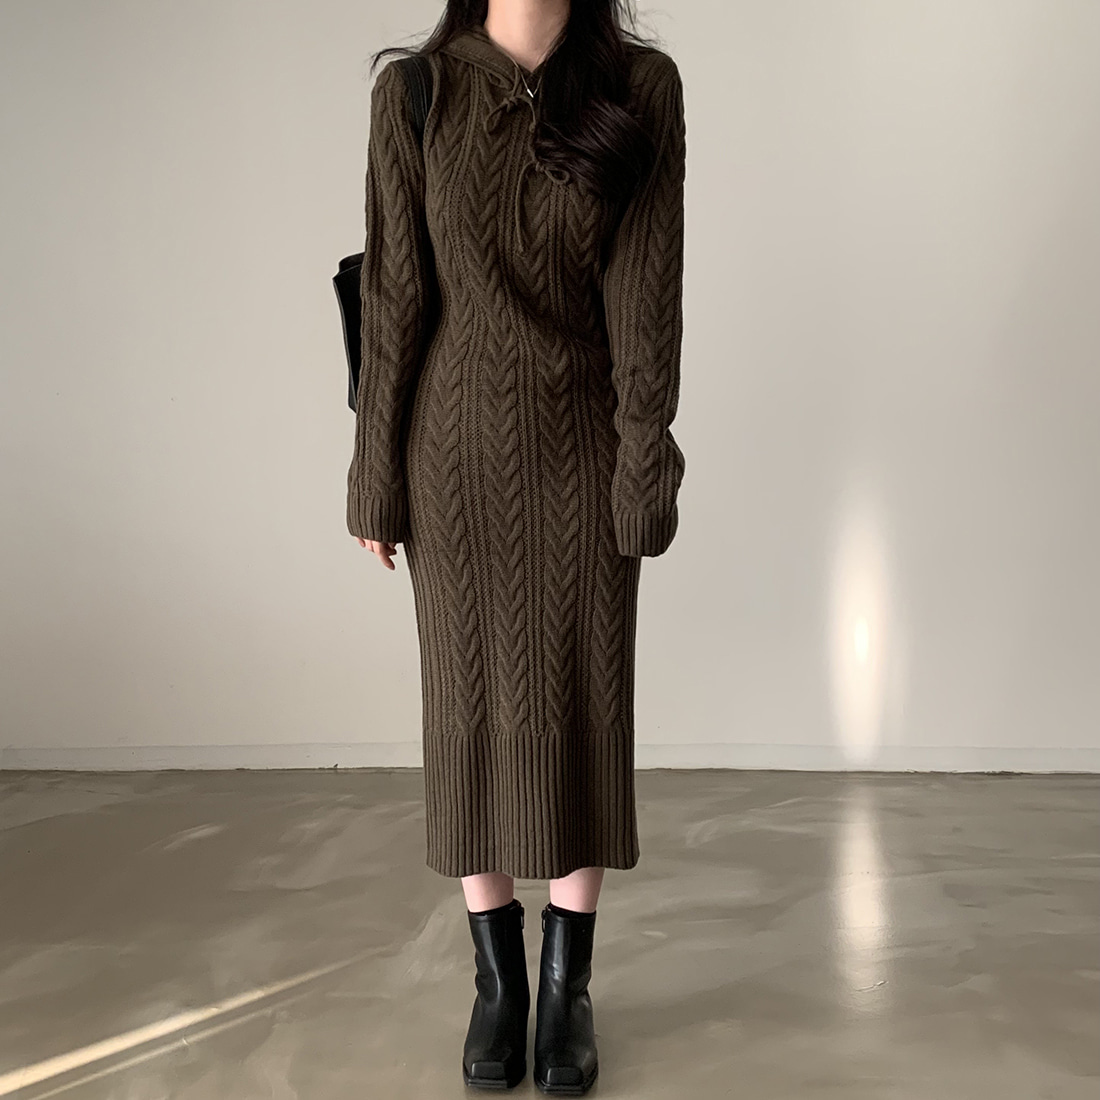 Korean chic versatile warm hooded retro long sweater dress knitted heavy industry dress for women